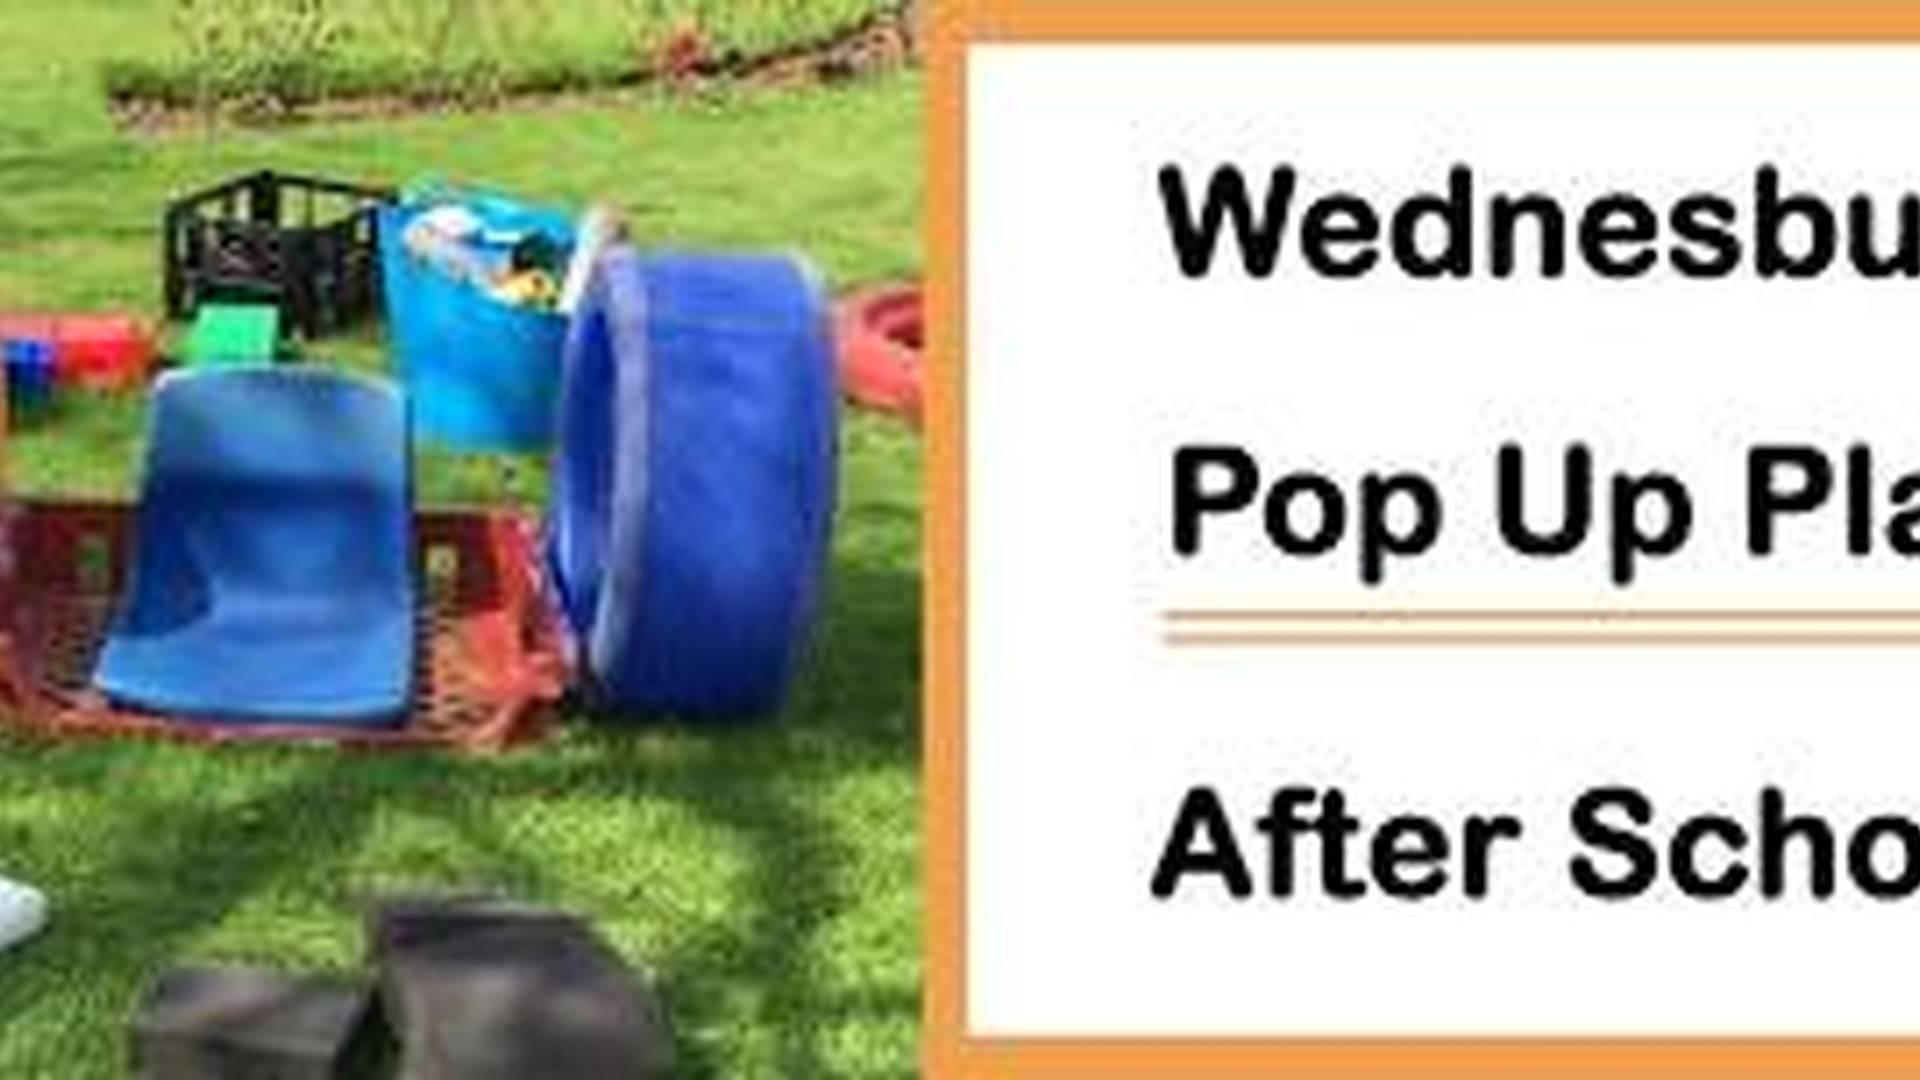 Wednesbury: Pop Up Play (After School) photo